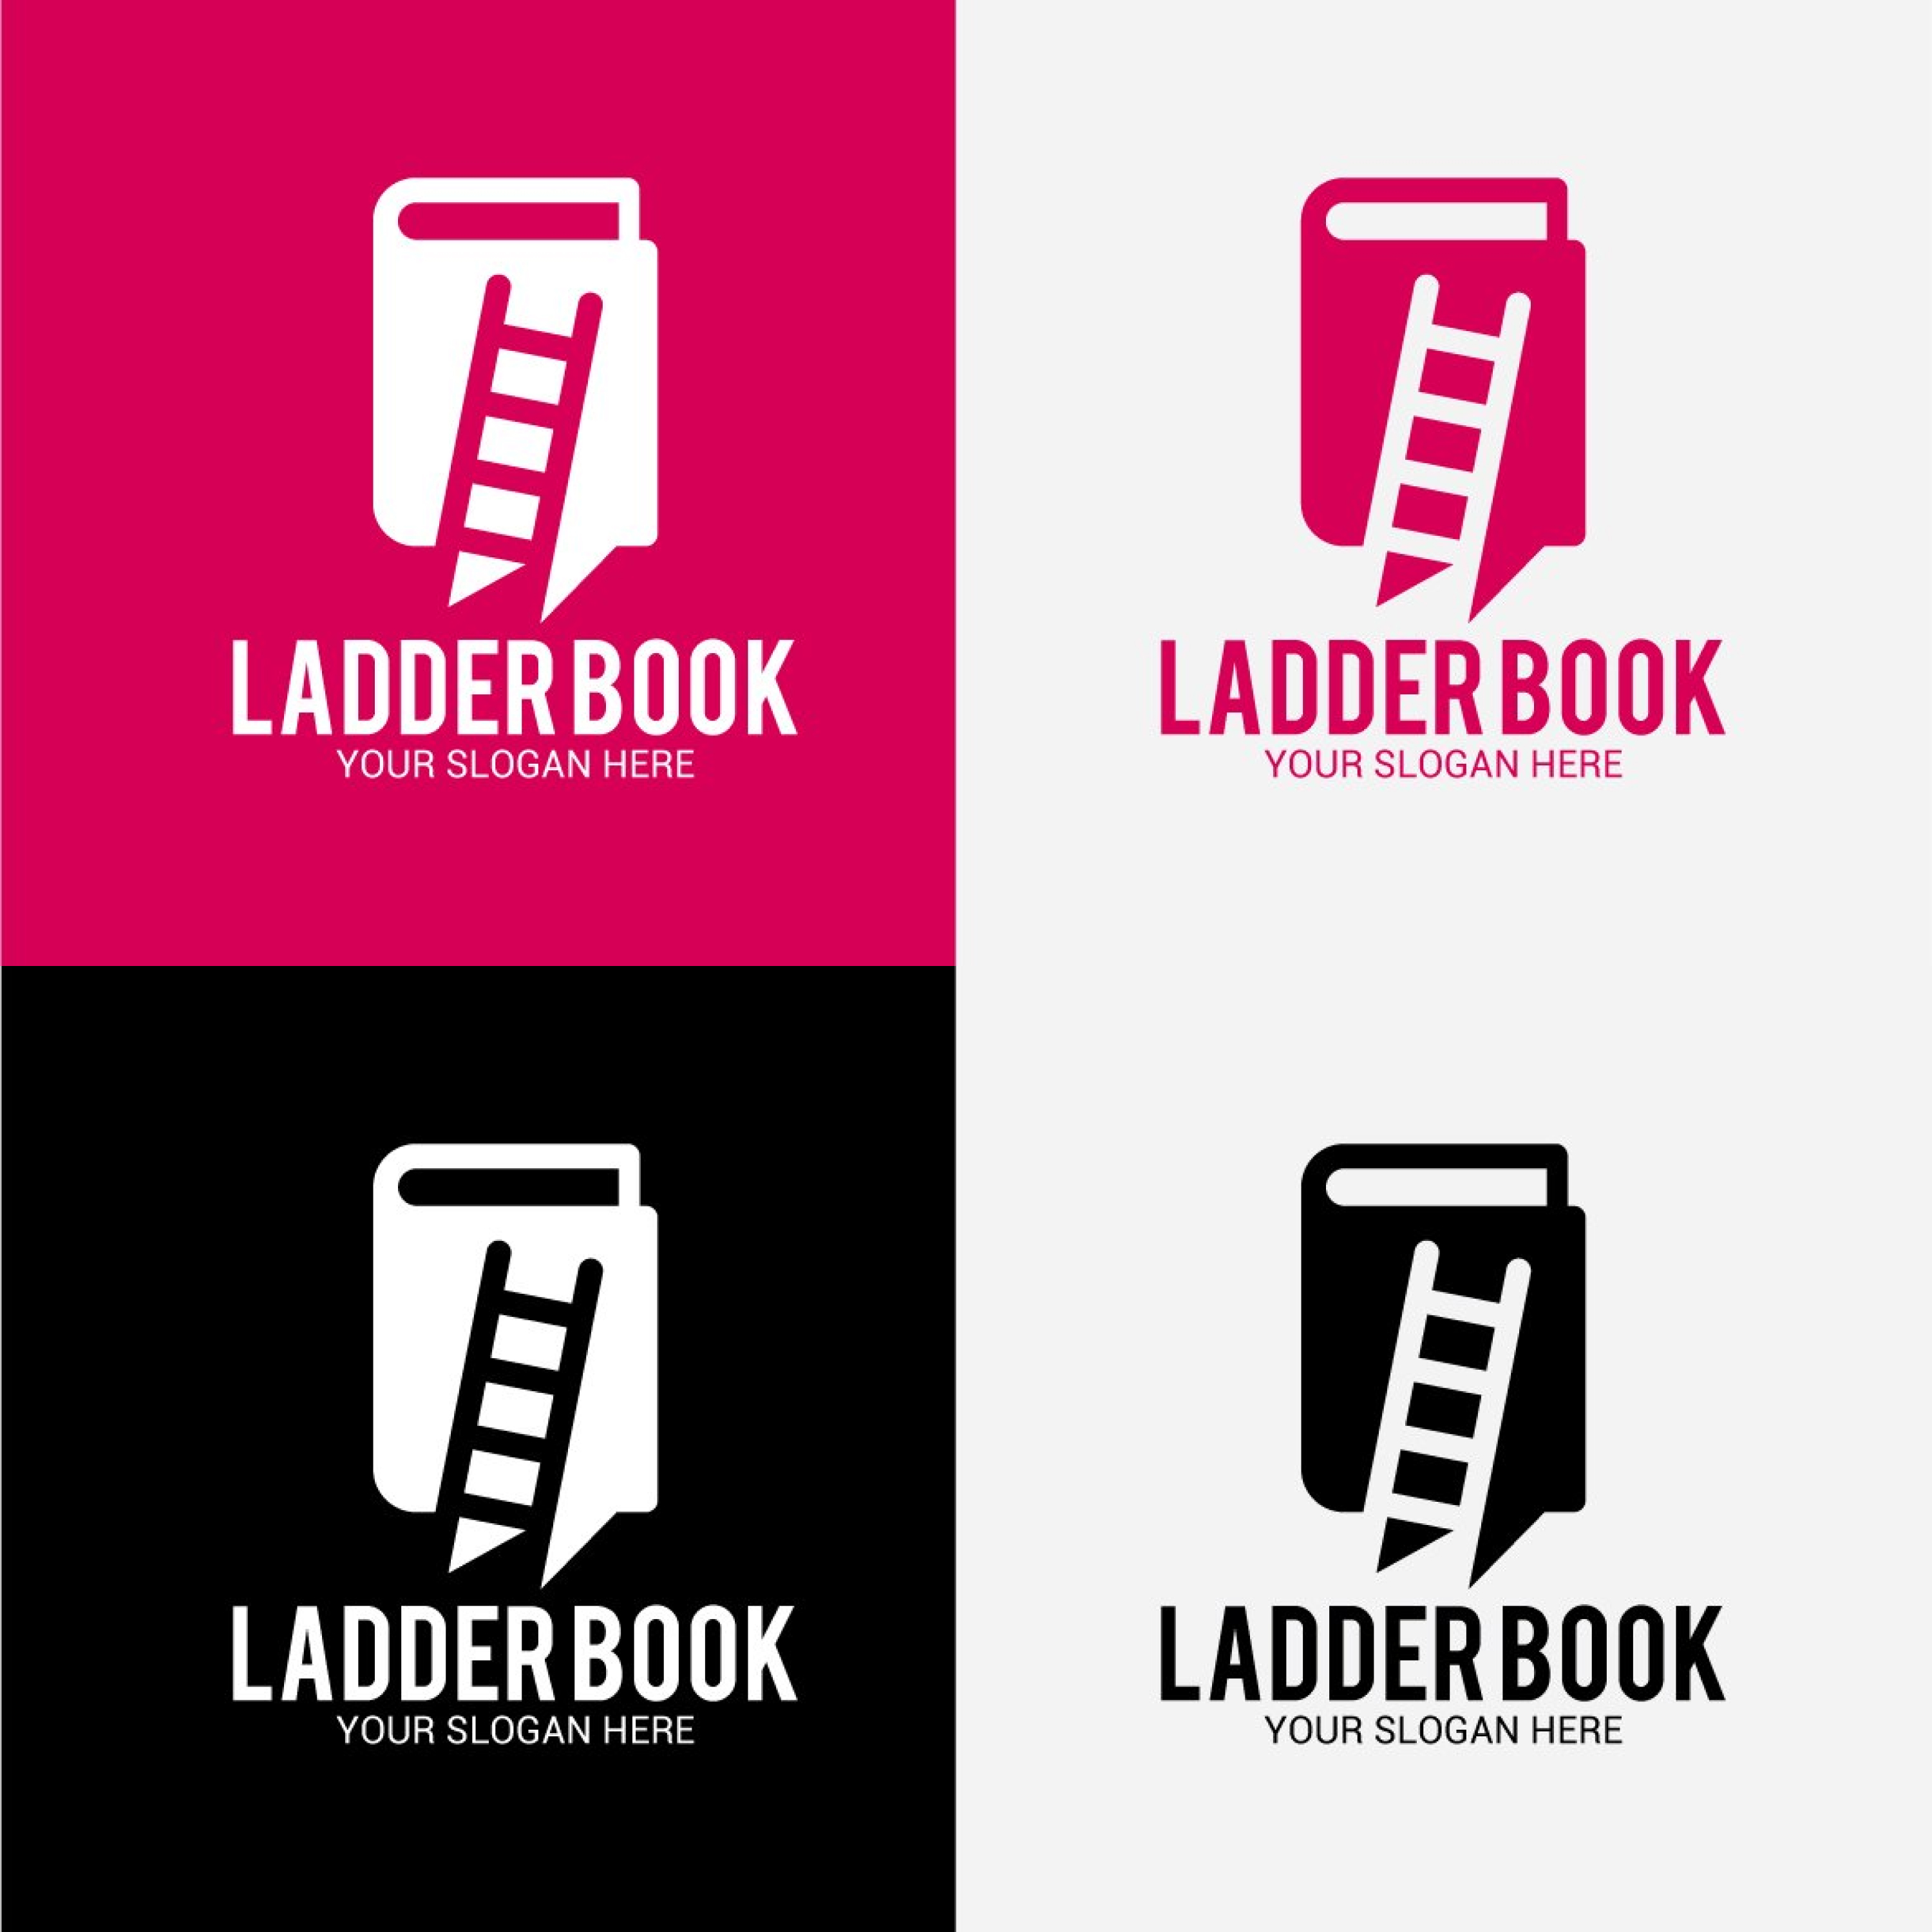 Preview ladder book logo.